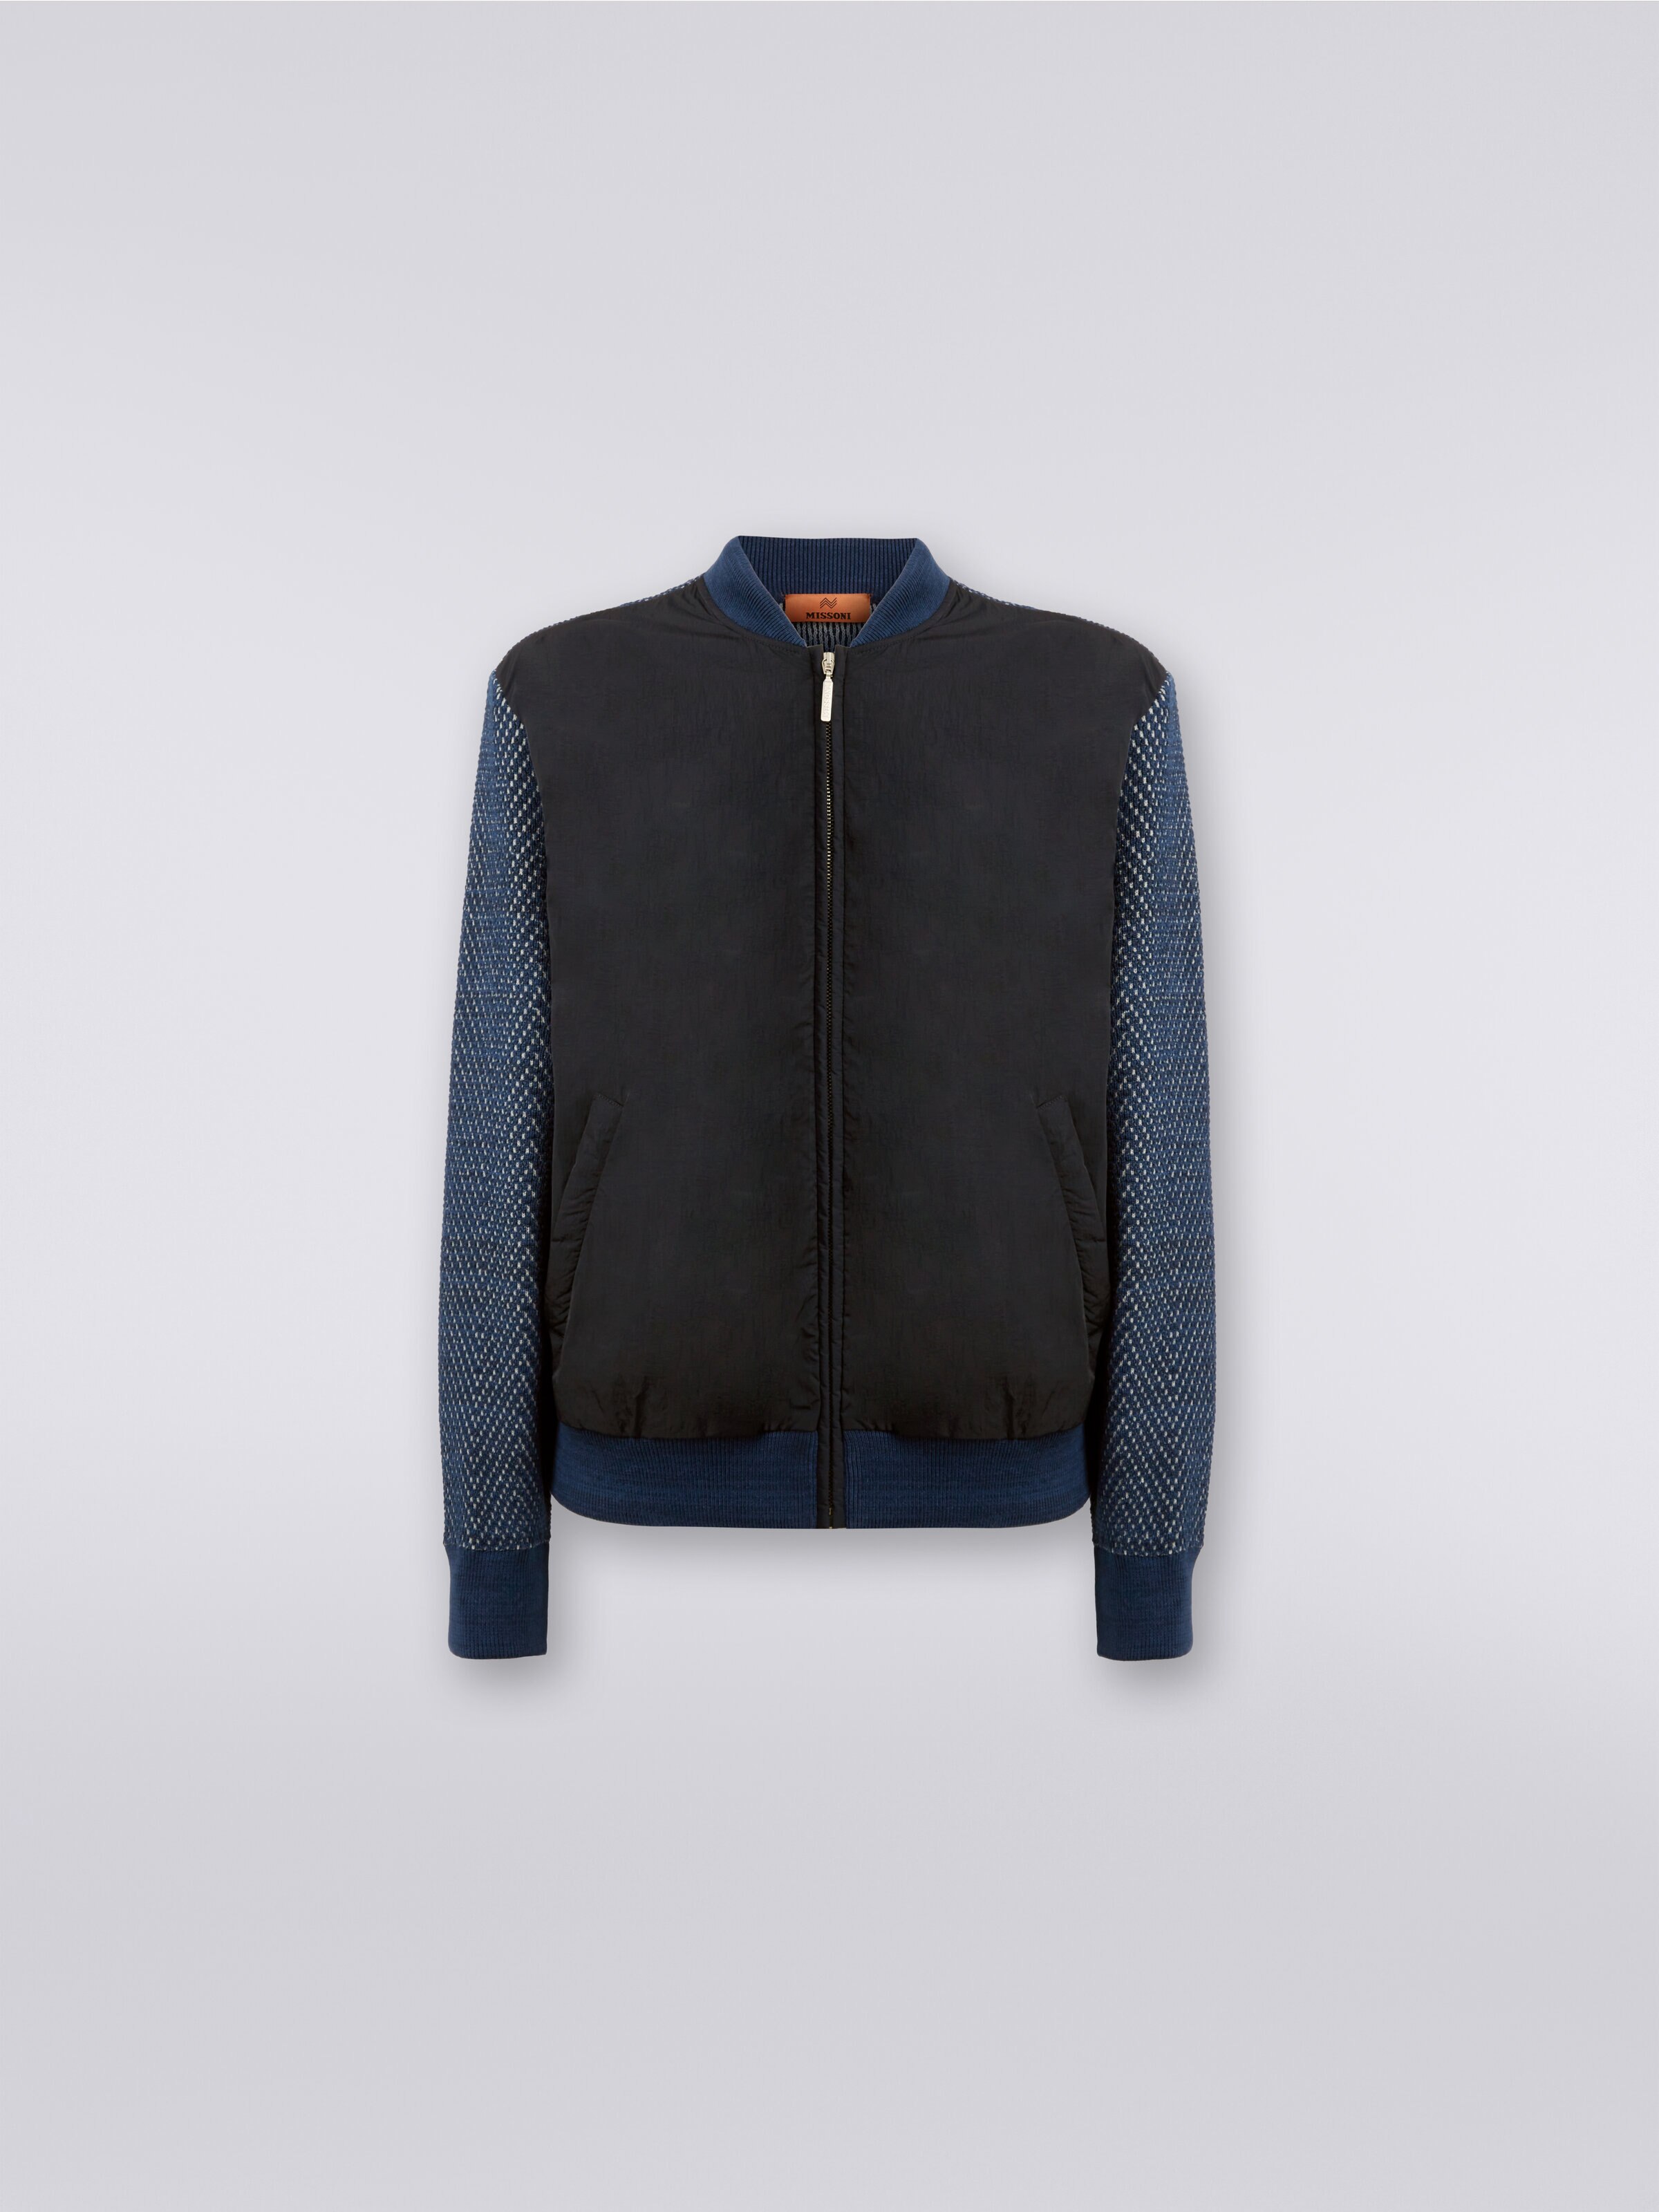 Cotton and nylon blend bomber jacket, Blue & Grey  - 0